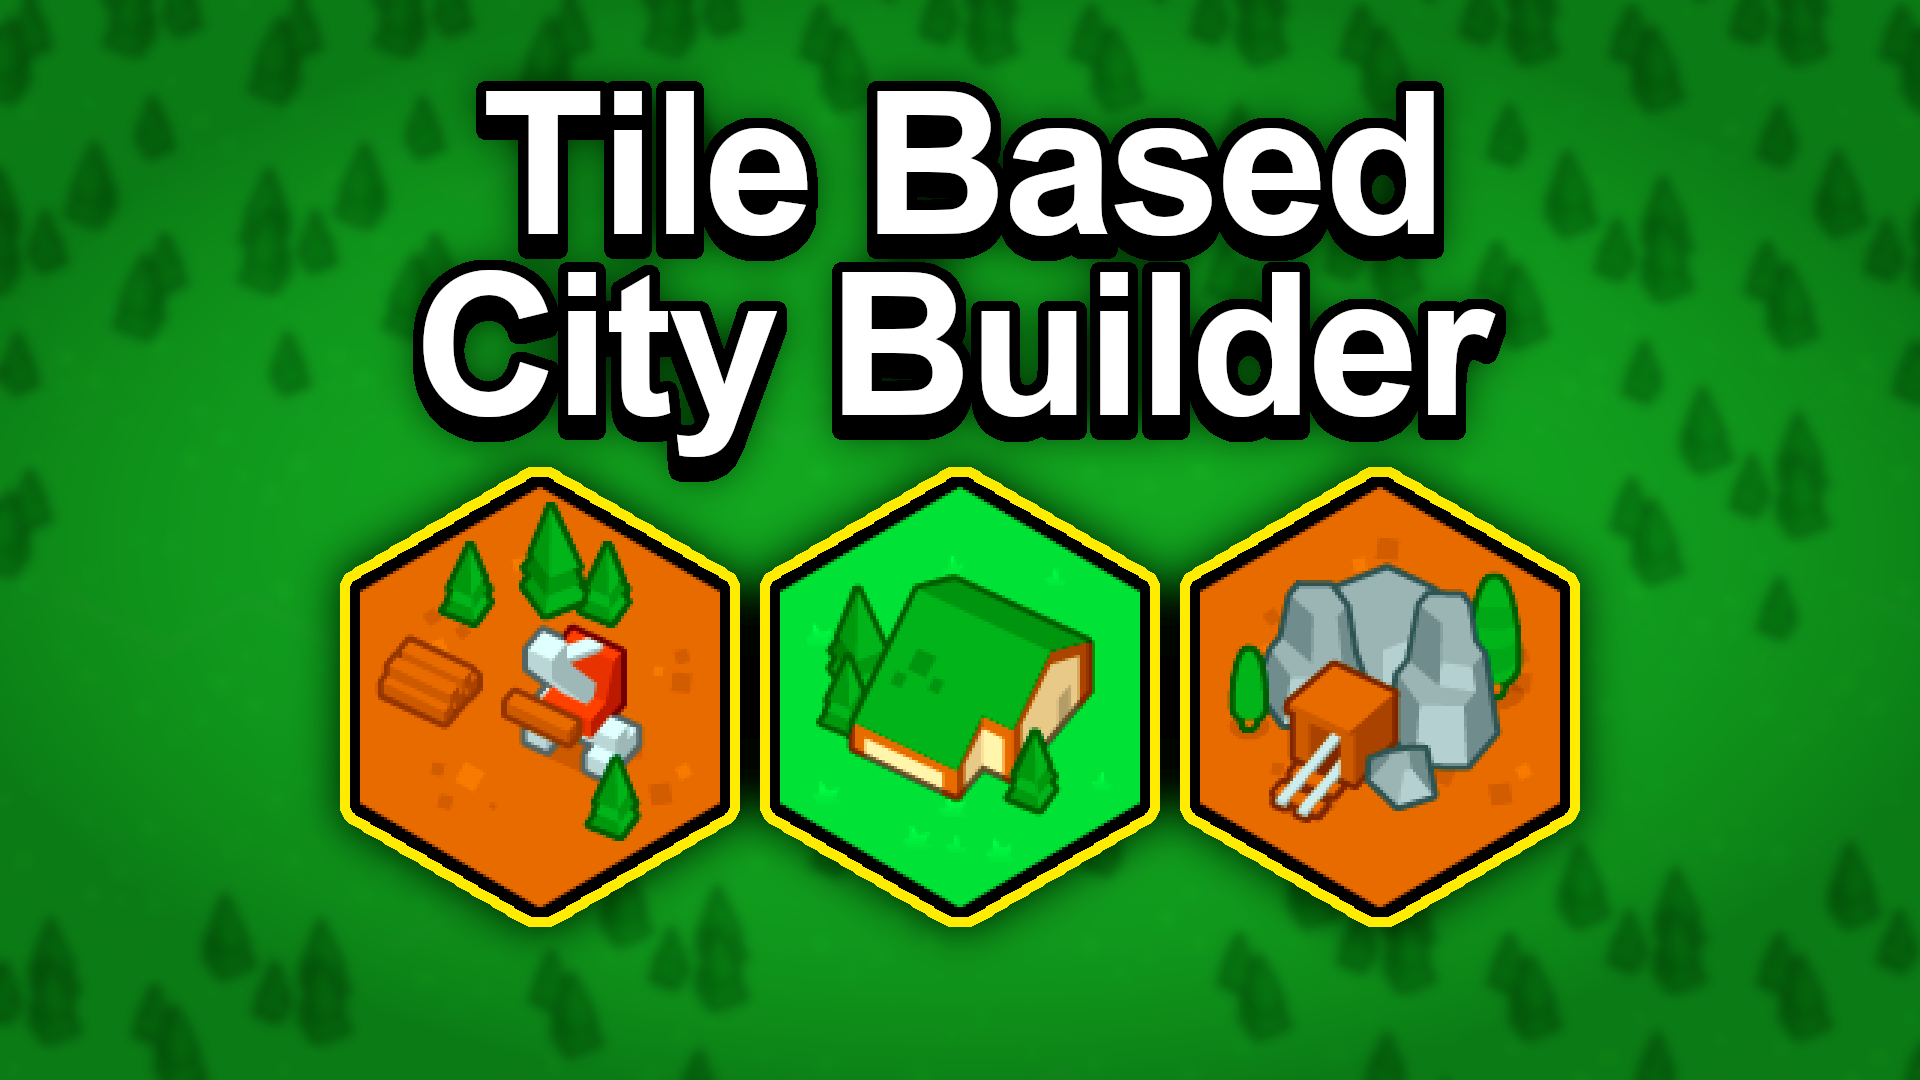 Tile based city builder